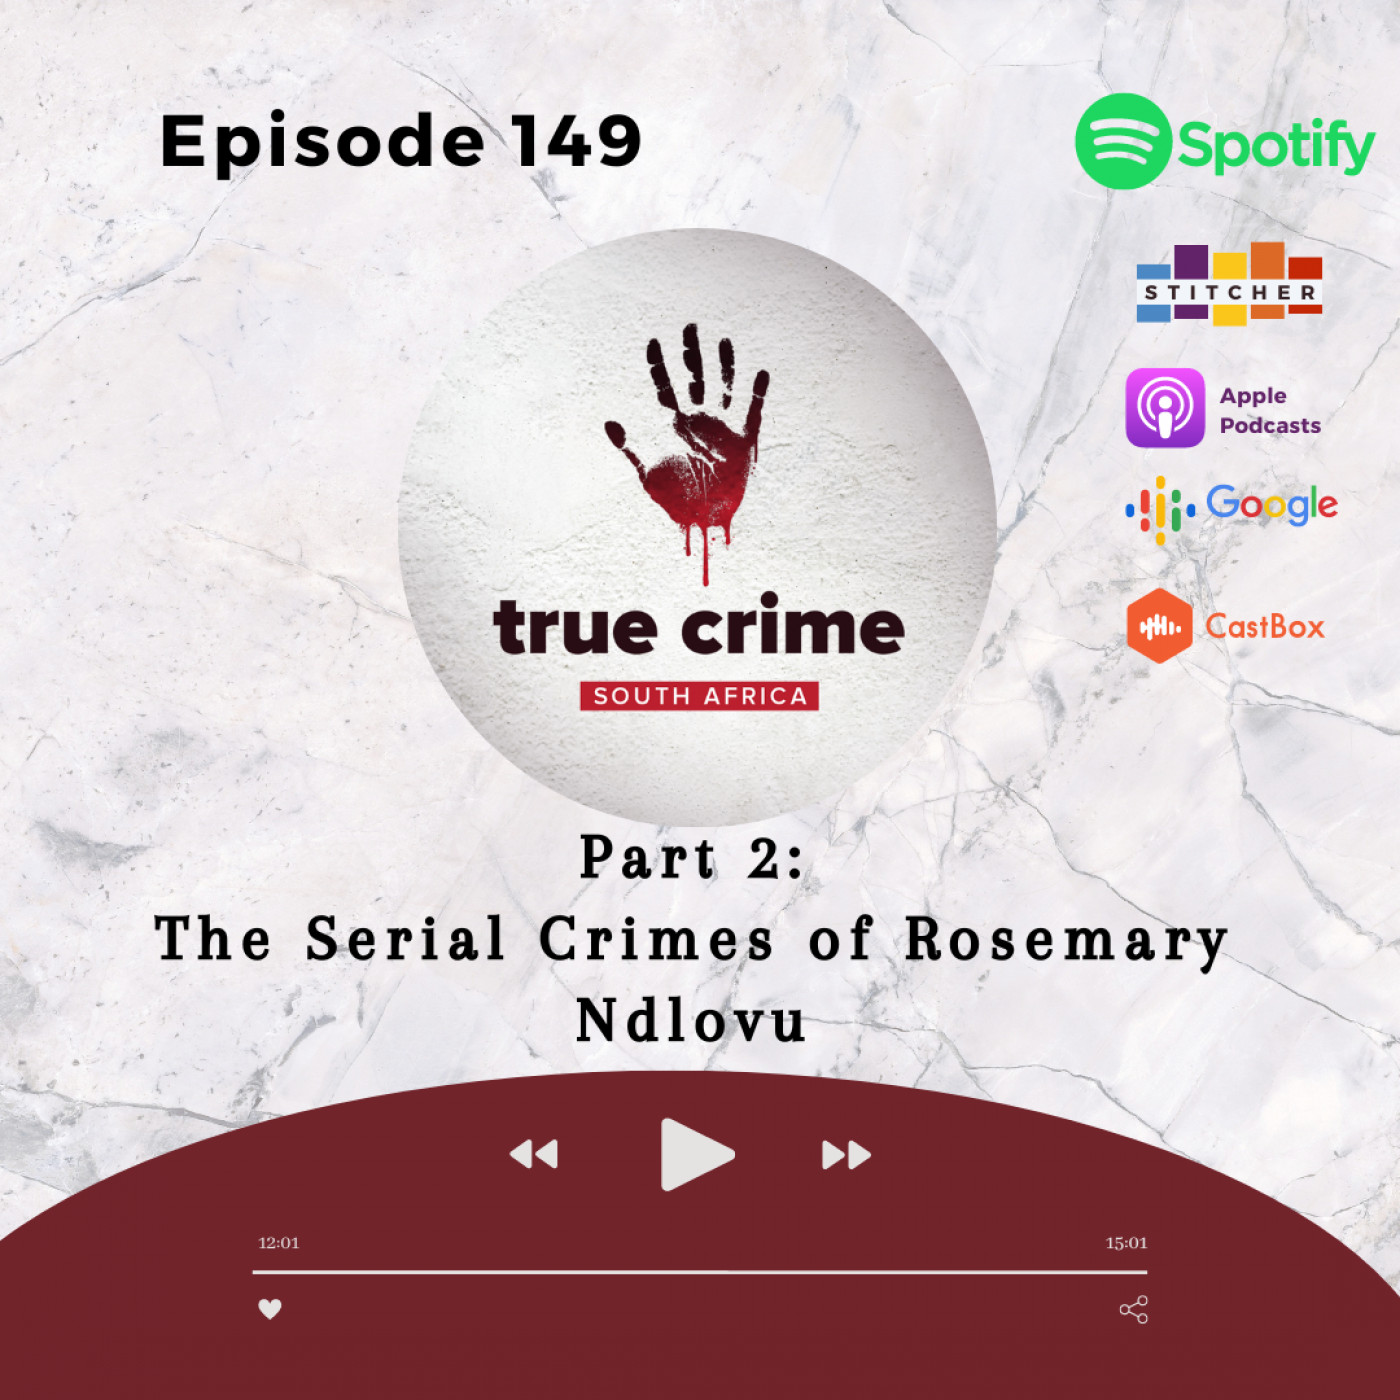 Episode 149 The Serial Crimes of Rosemary Ndlovu Part 2